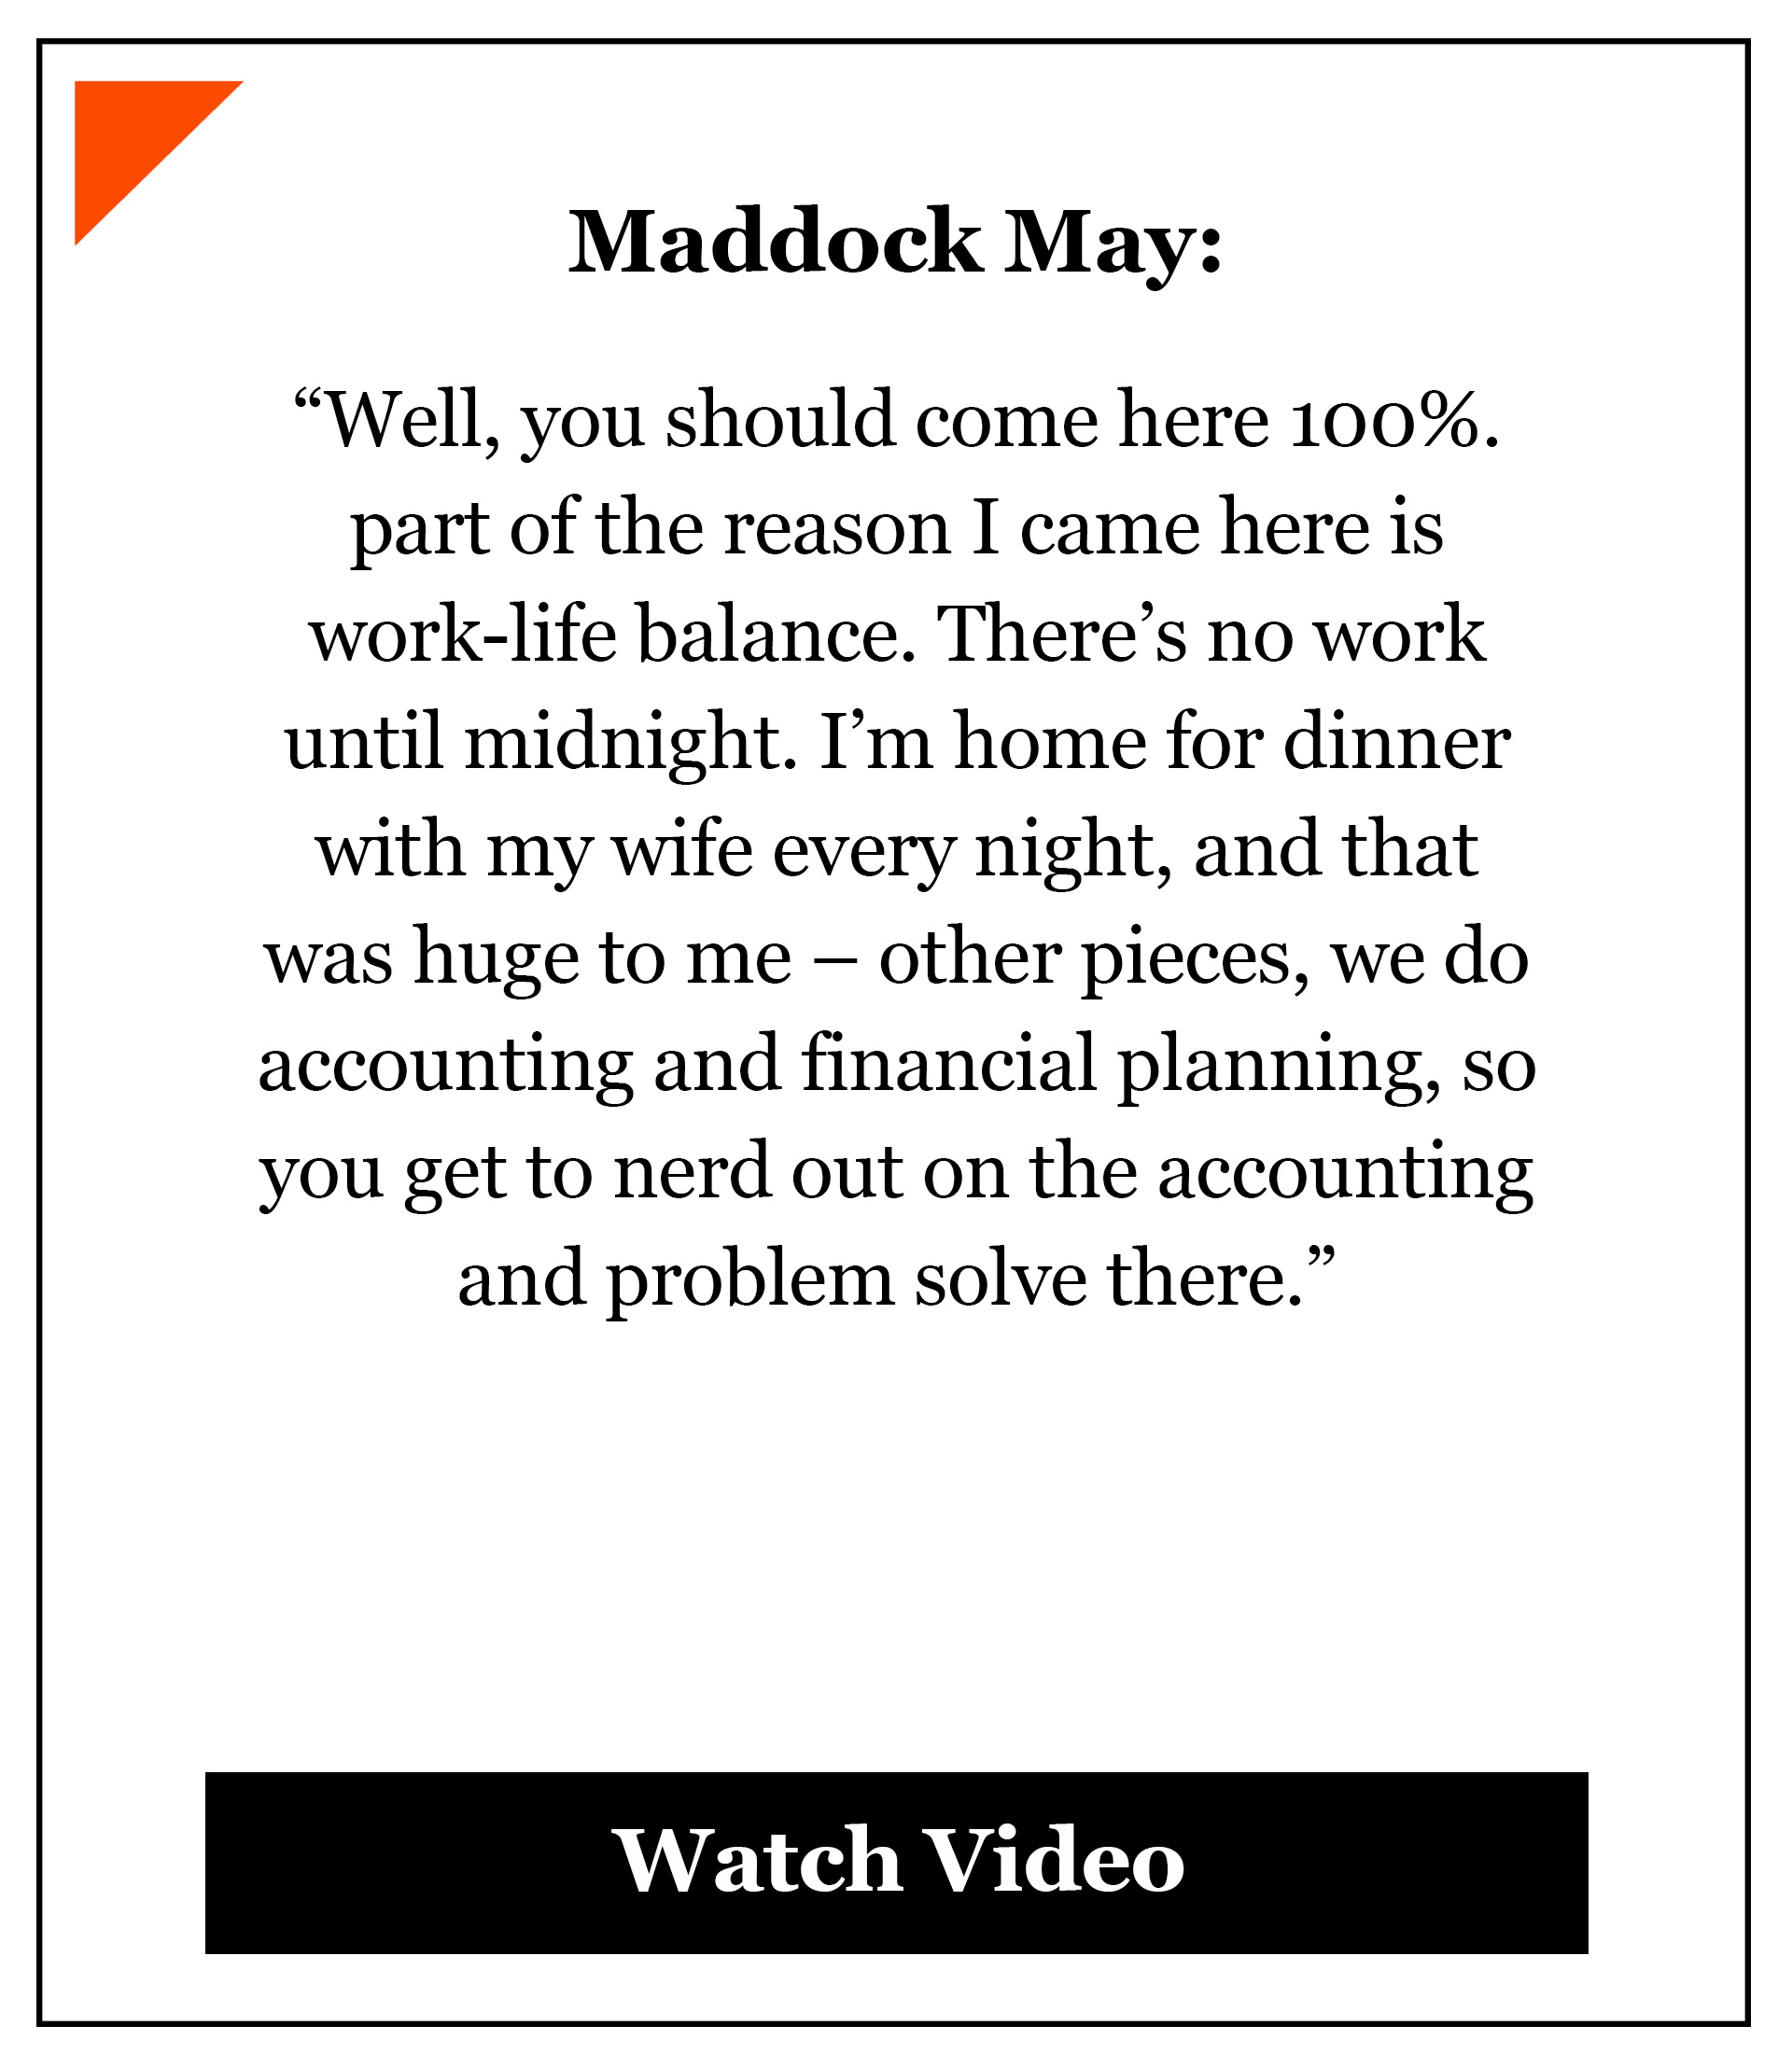 MLW-Testimonial-Maddock